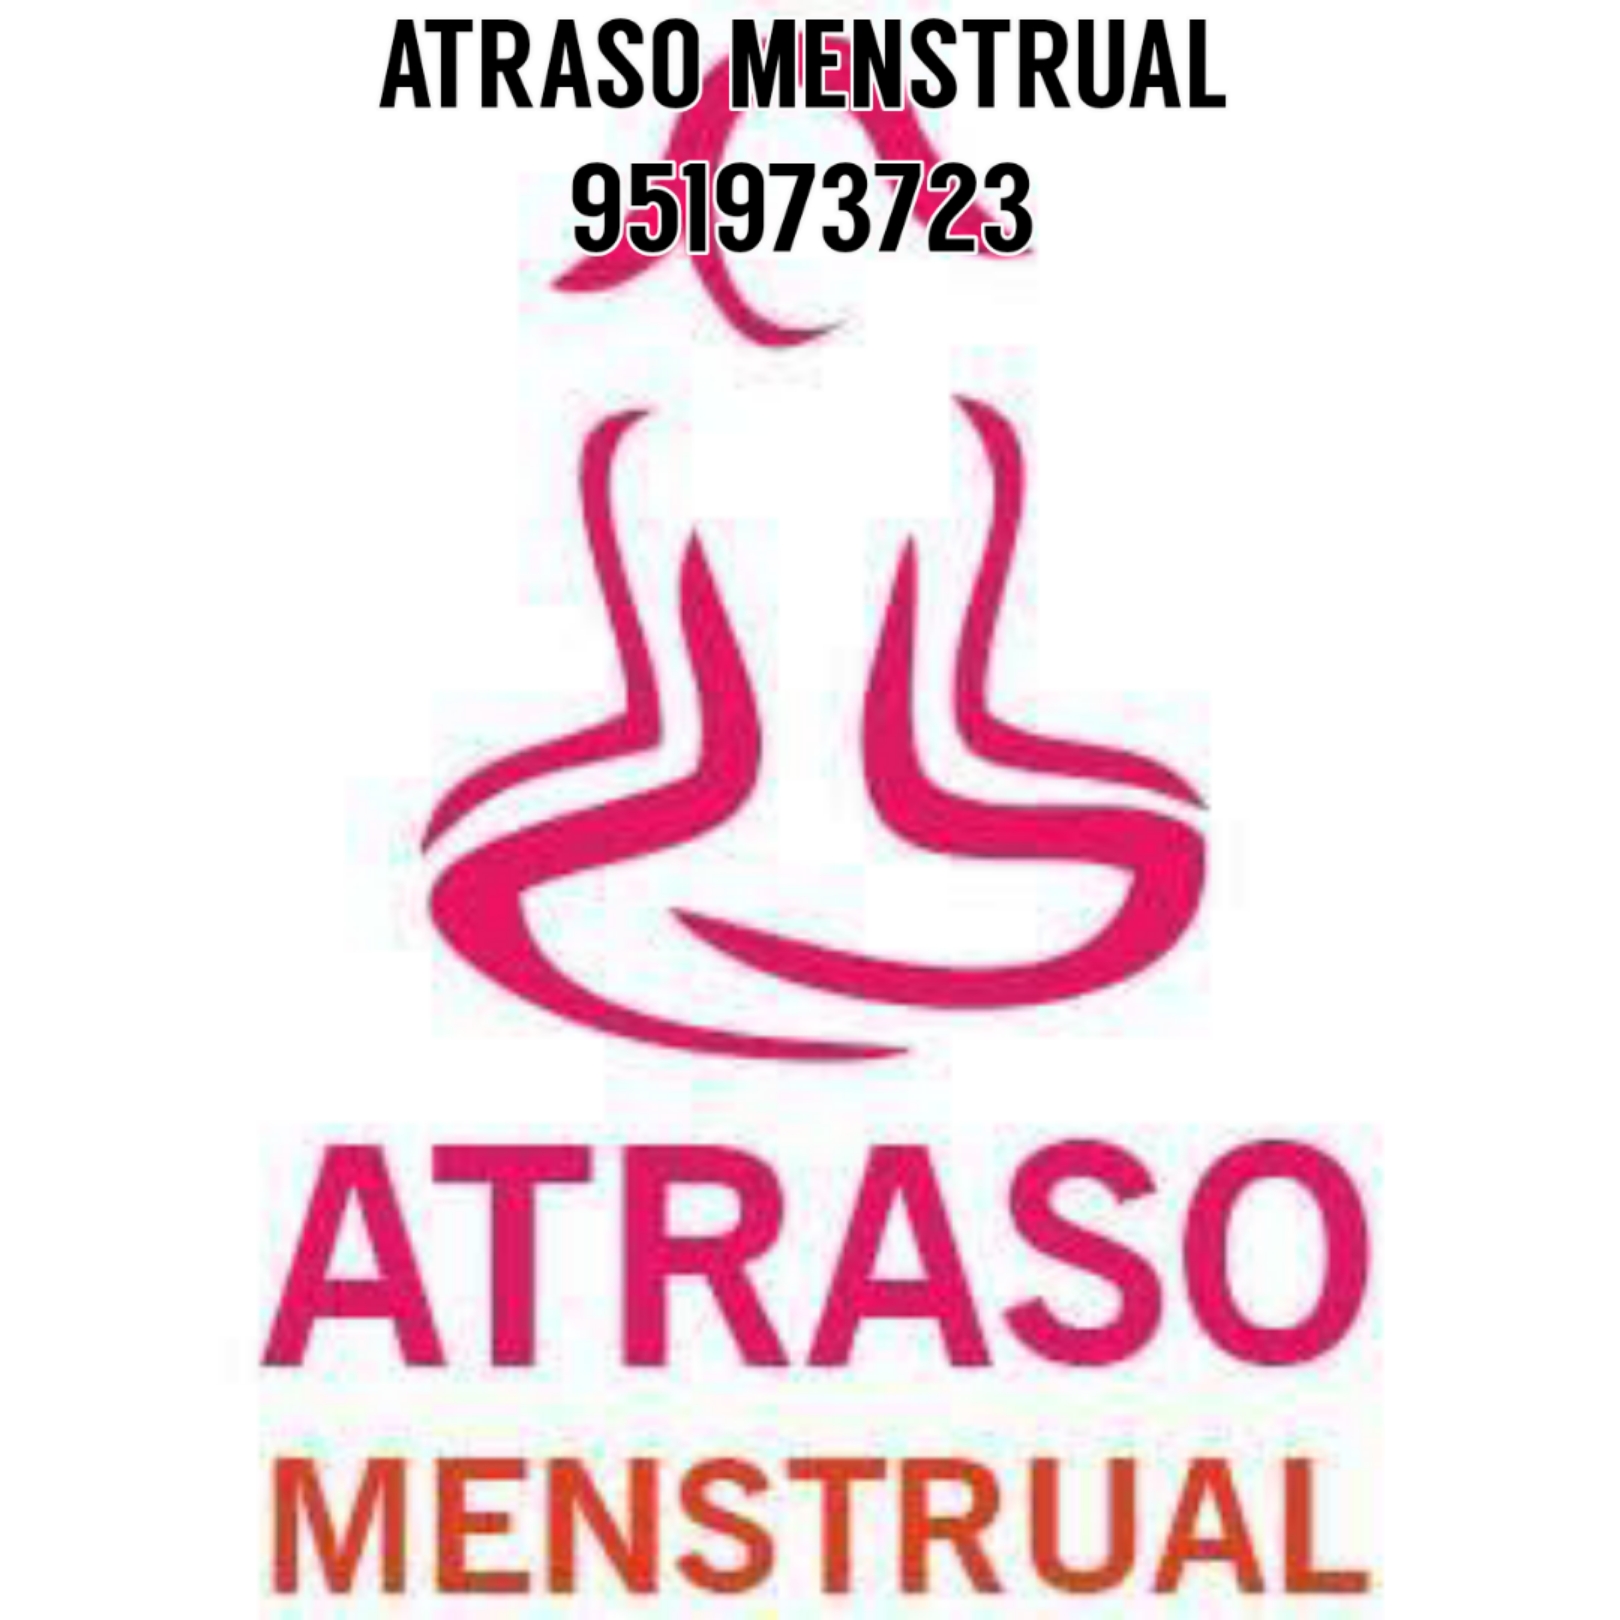 Atraso Menstrual 951973723 PISCO Clínica Garantizada